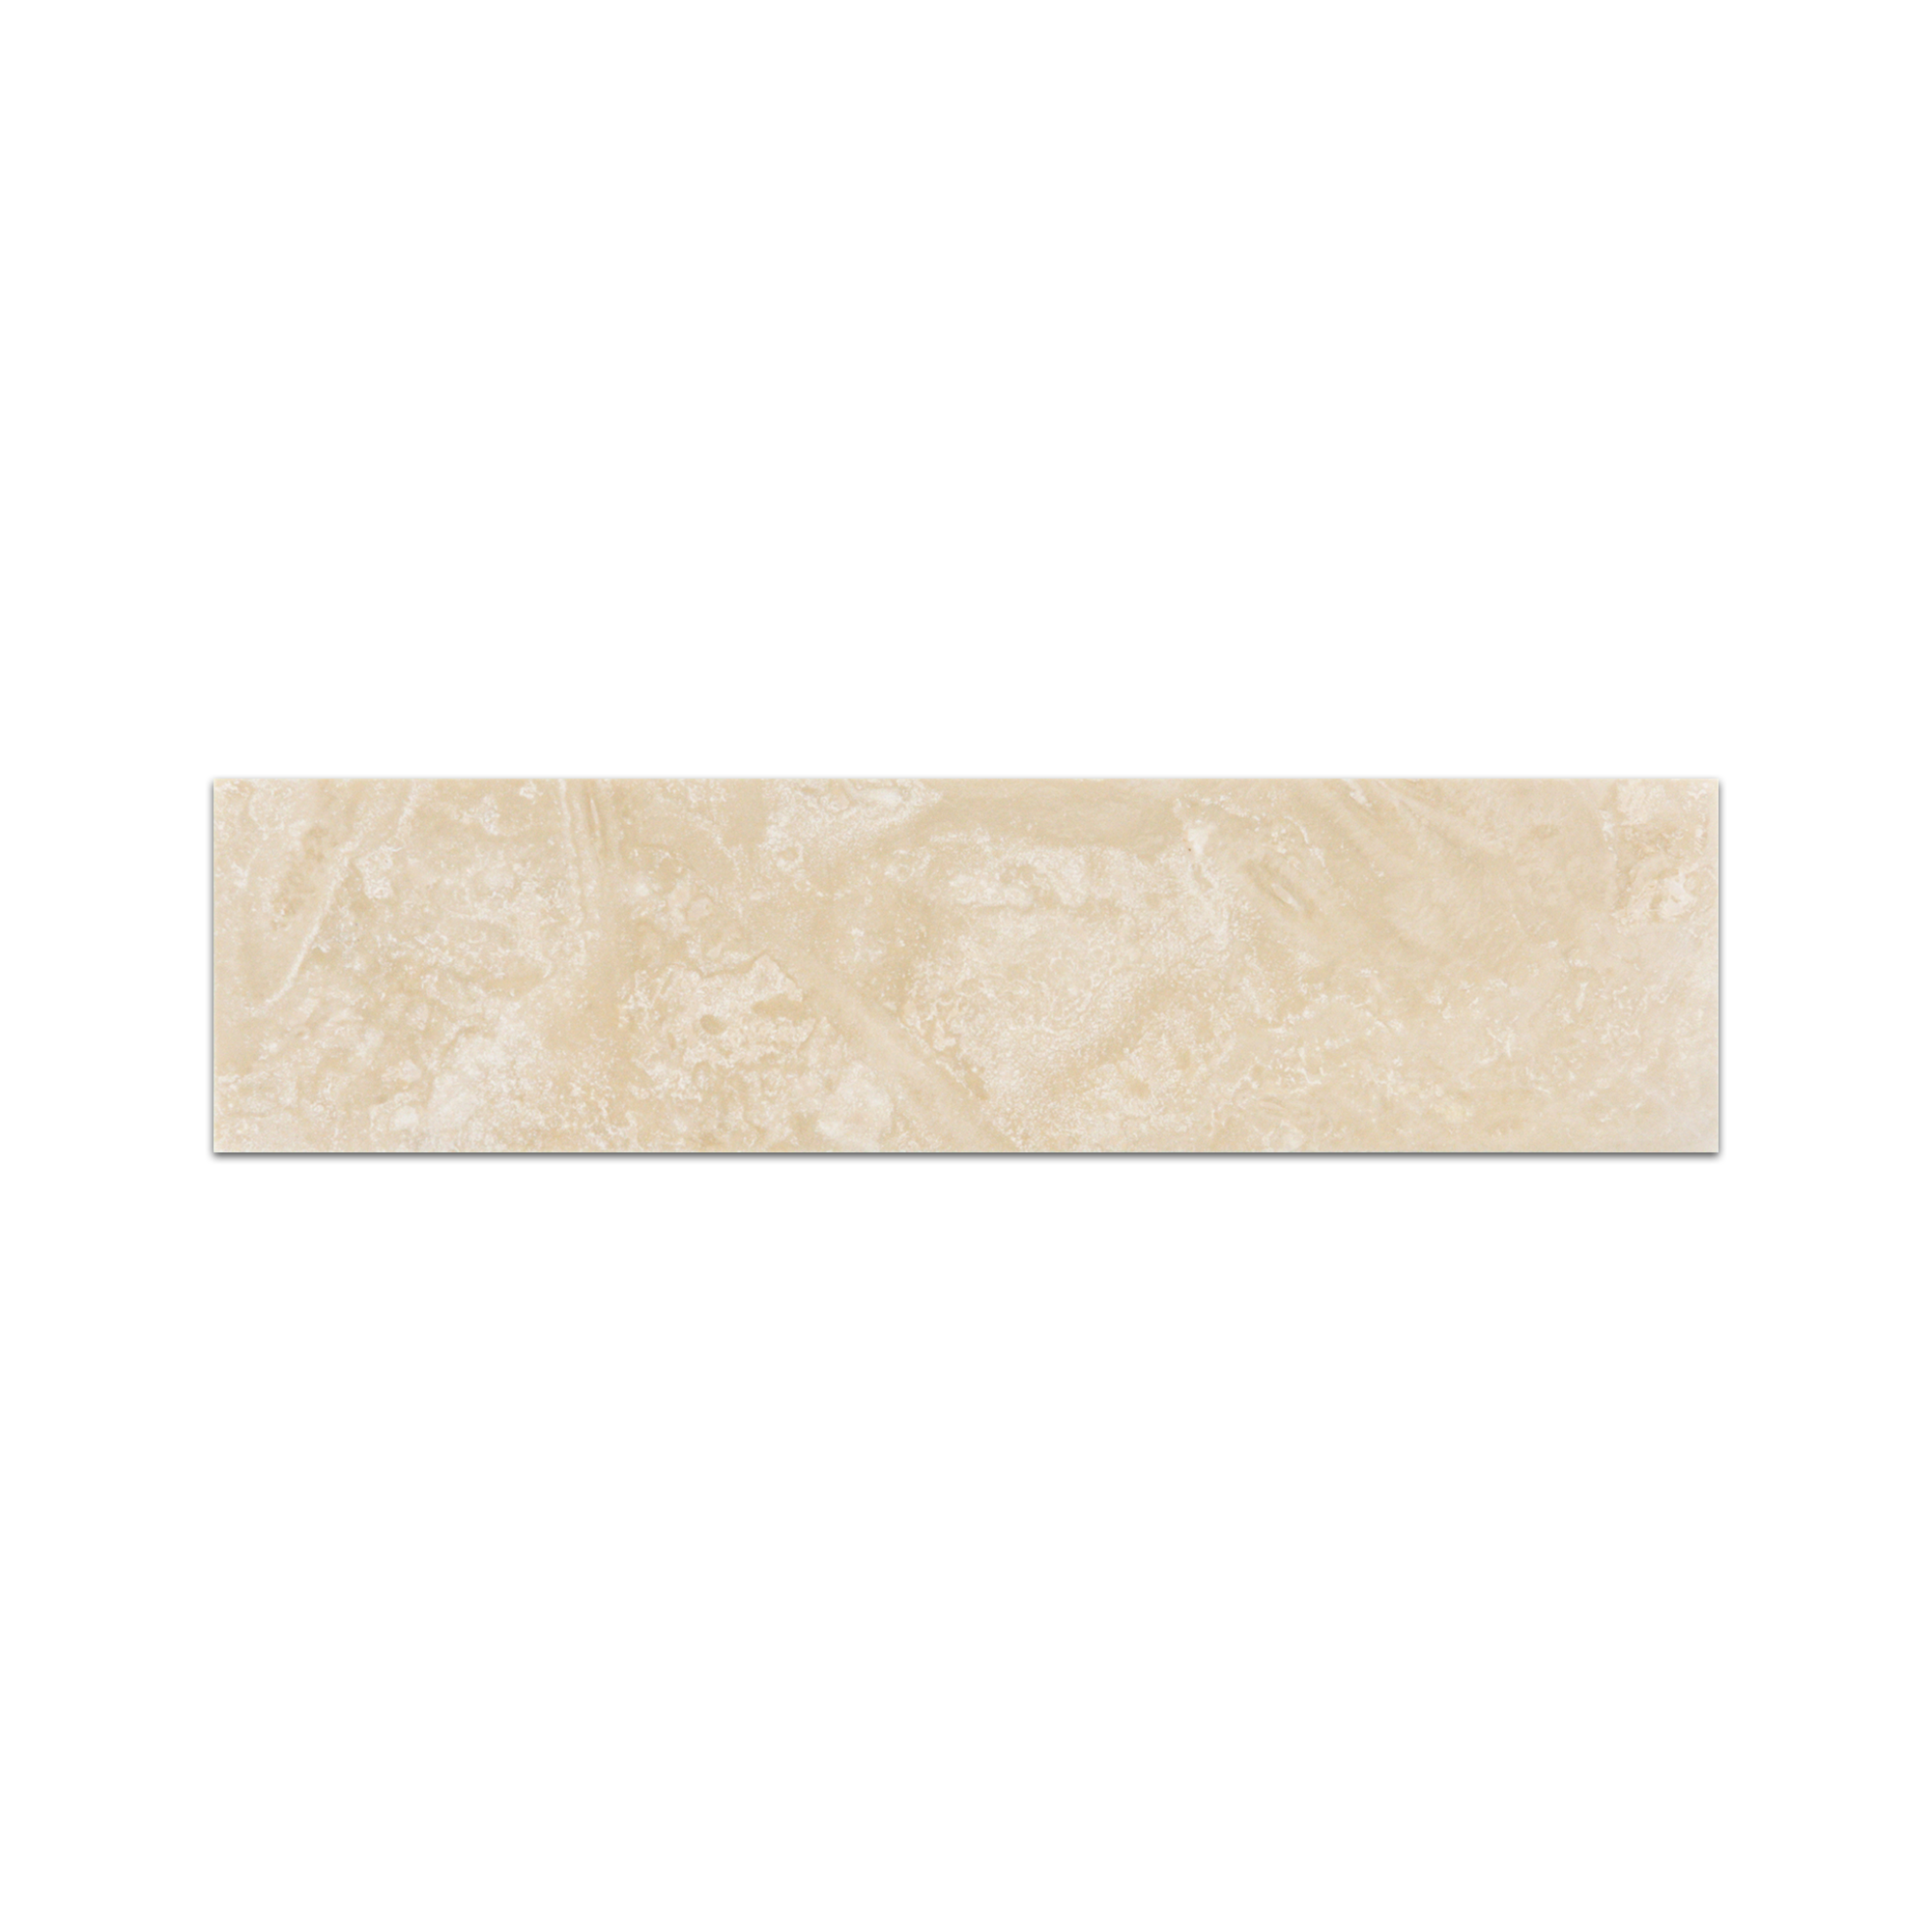 Elon light ivory cross cut travertine rectangle field tile 3x12x0.375 honed - Surface Group International